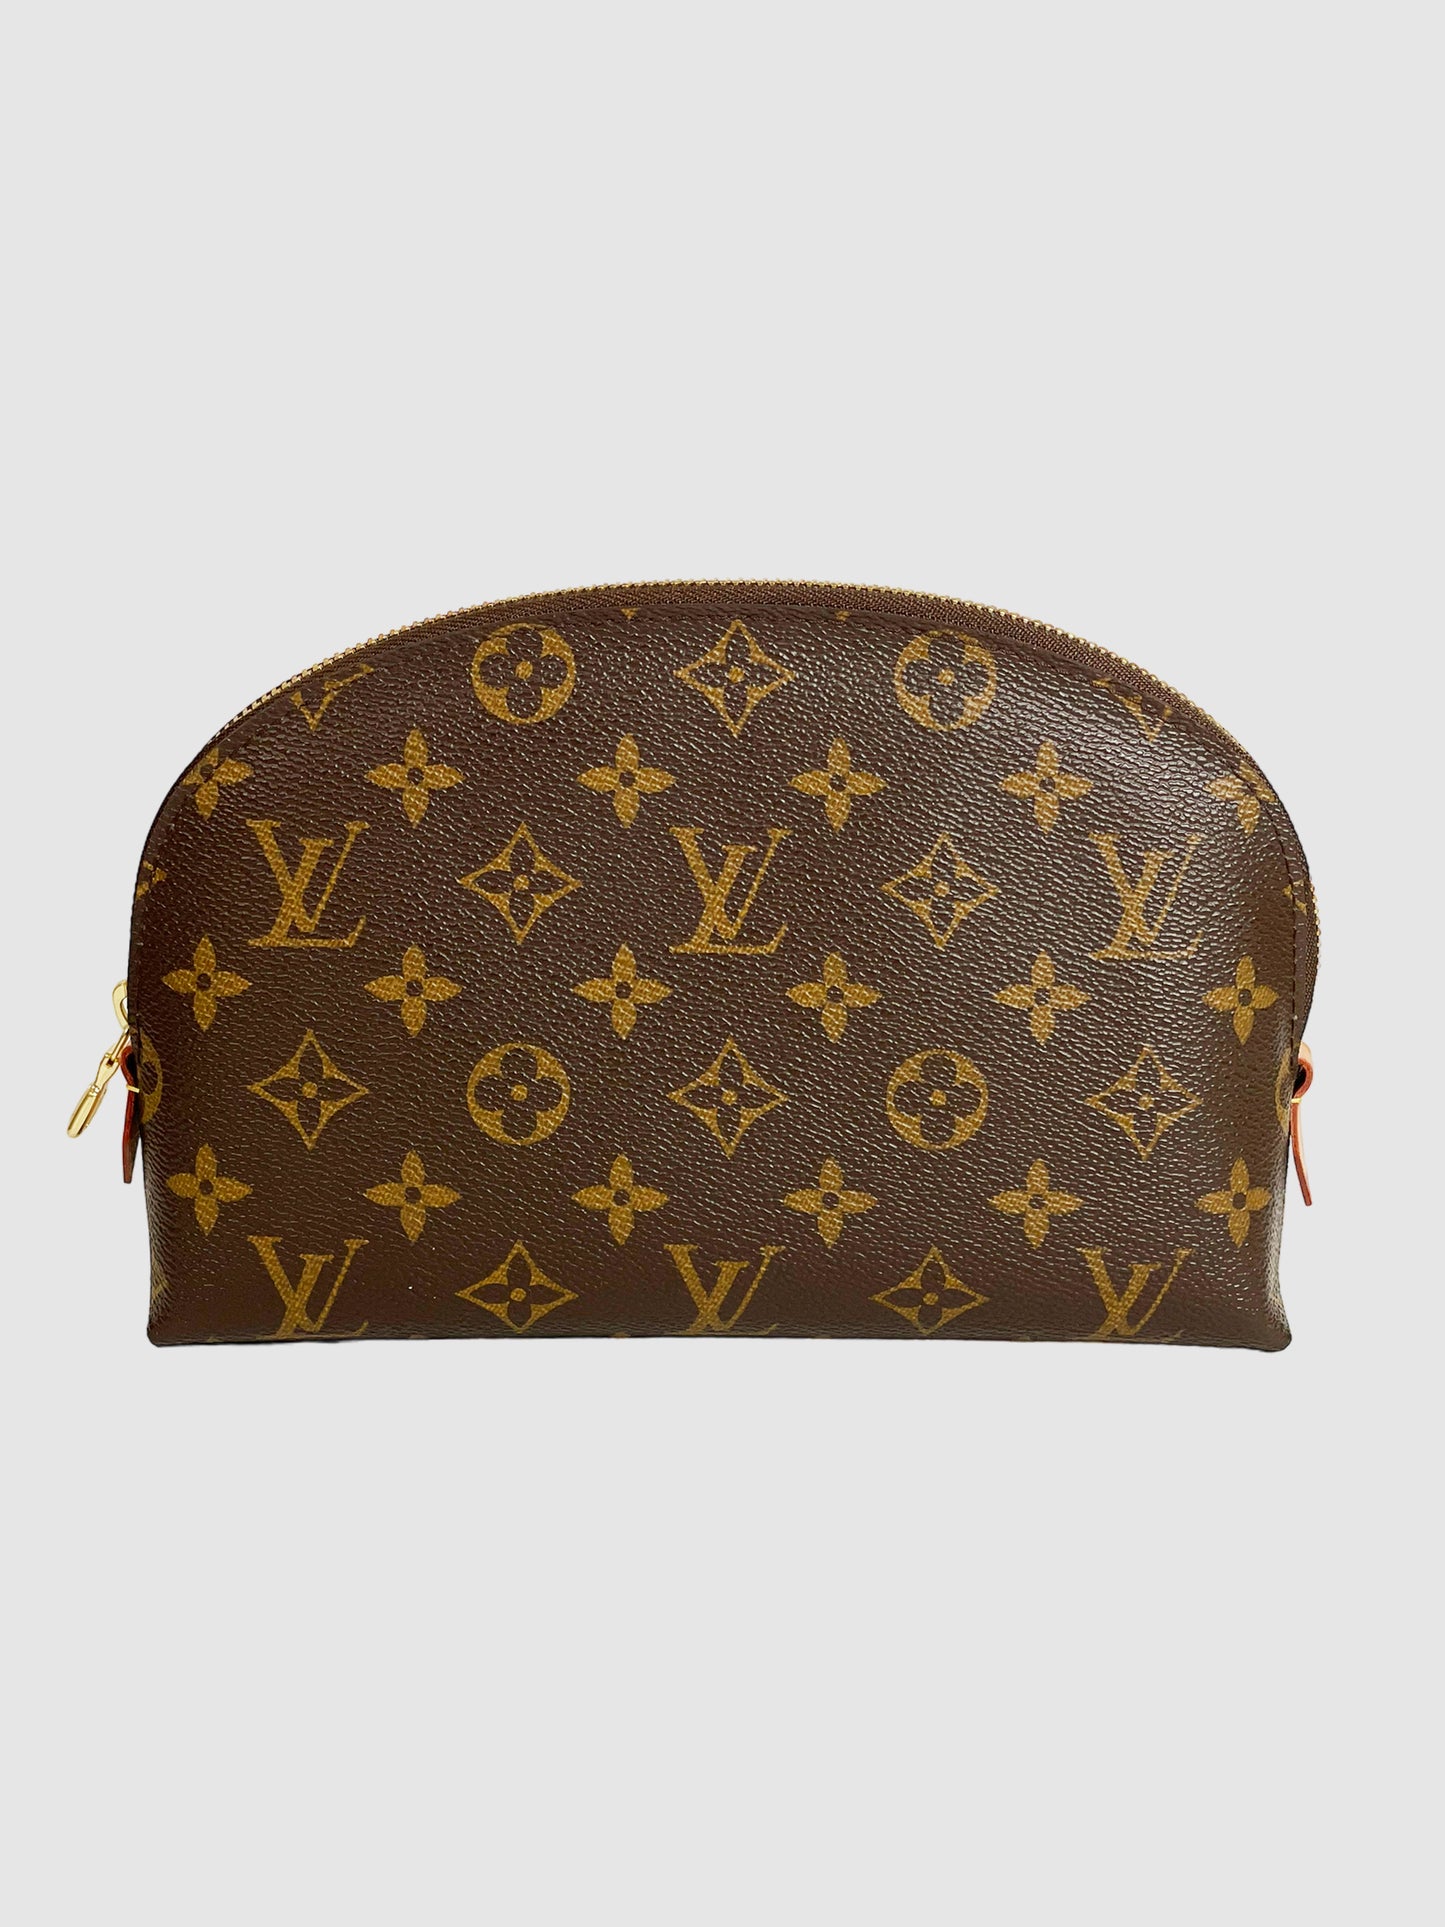 Louis Vuitton Monogram Cosmetic Pouch GM